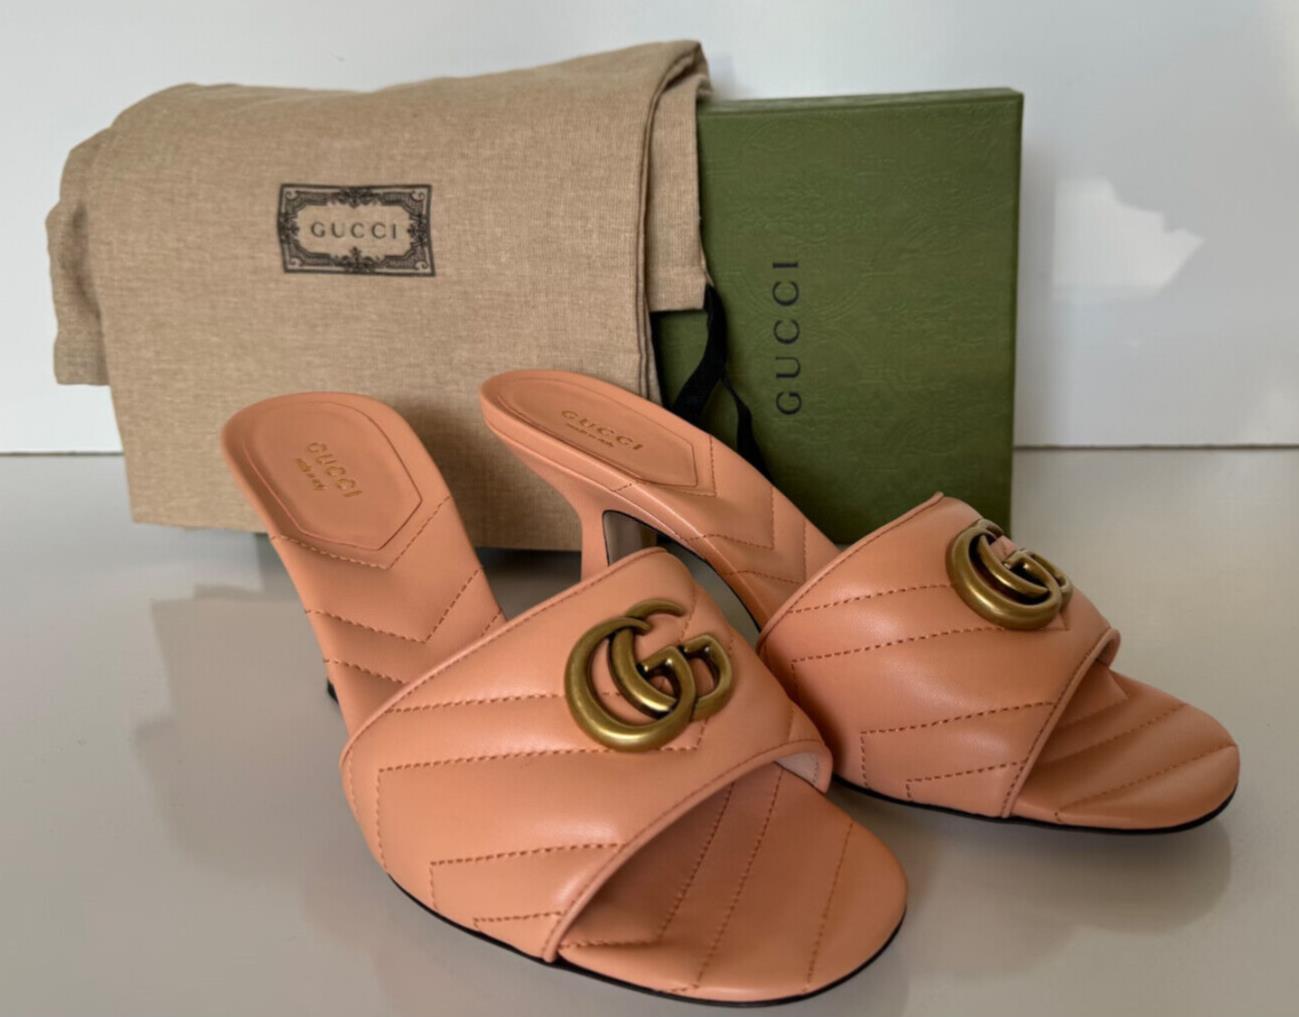 Gucci Women's GG Marmont Leather Slides Sandals 9.5 US (39.5 Euro) 674839 IT NIB